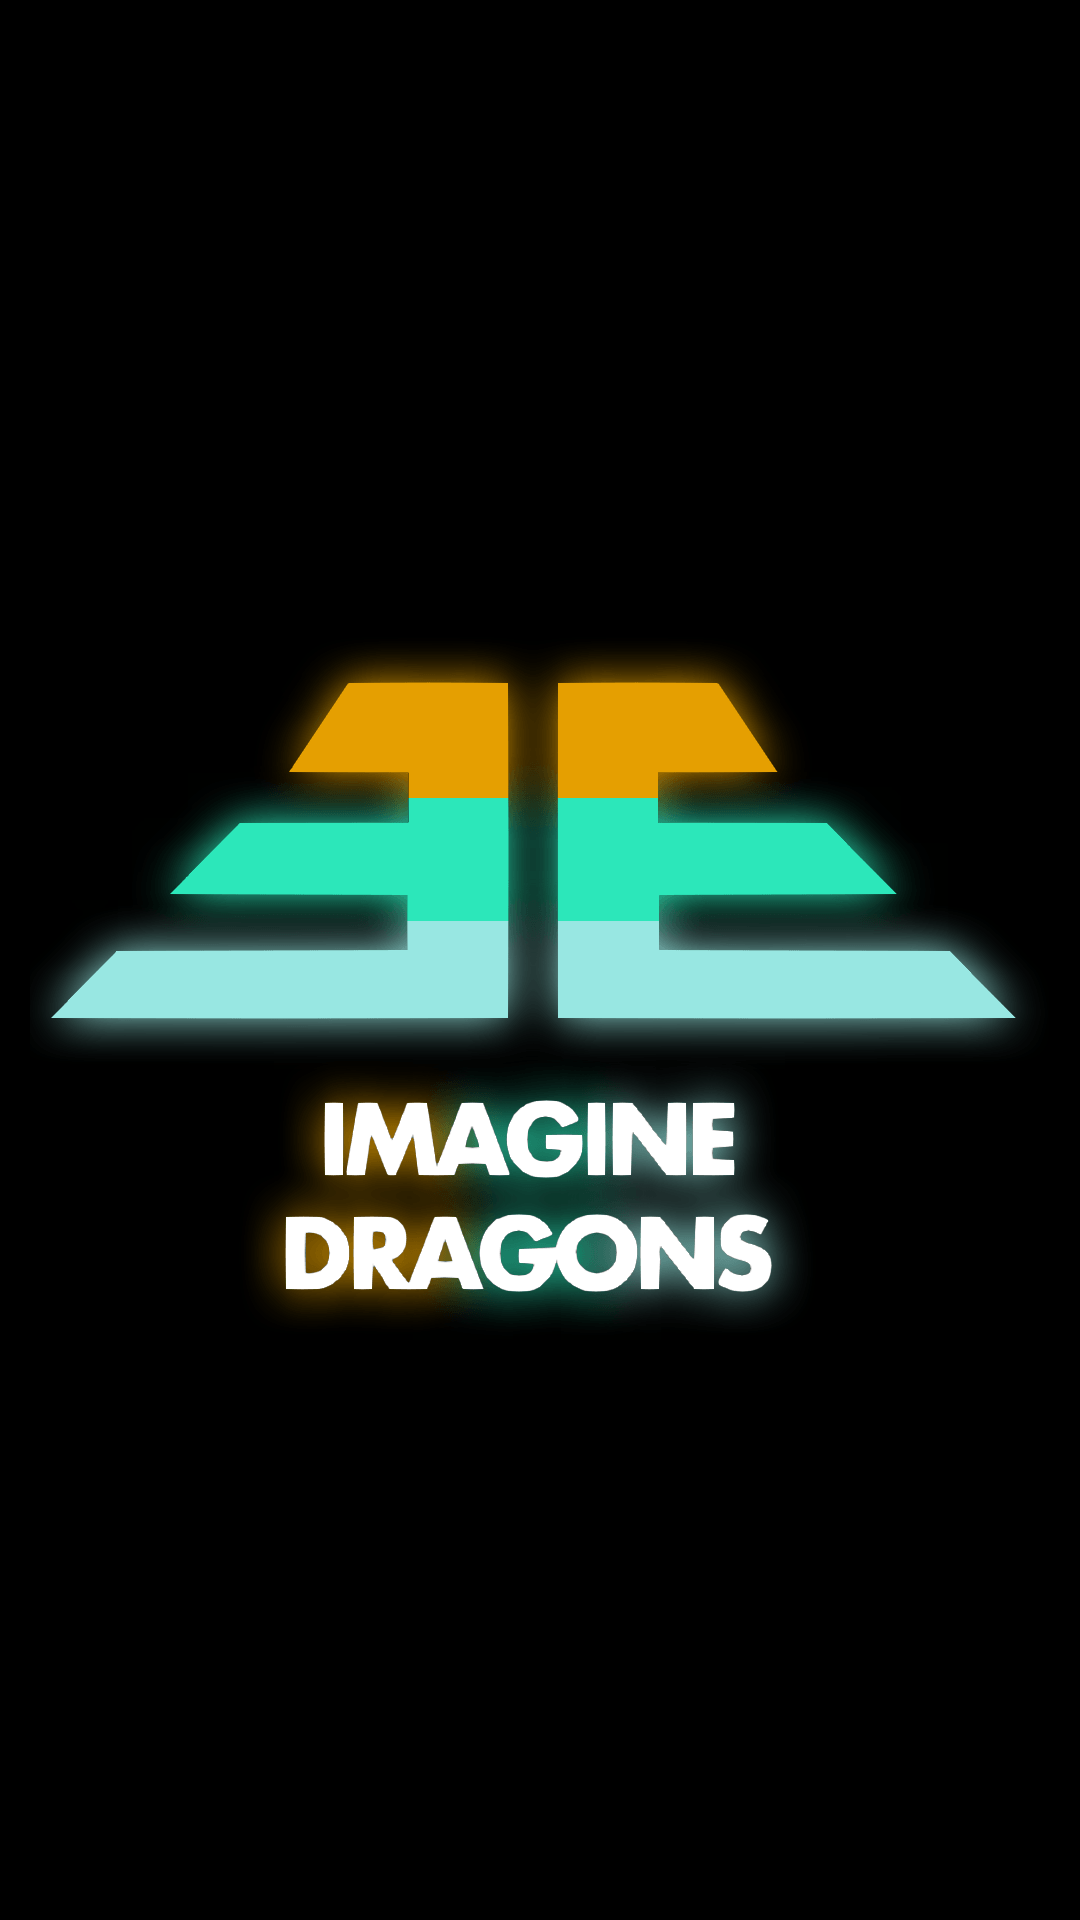 Imagine Dragons Logo Wallpapers - Wallpaper Cave